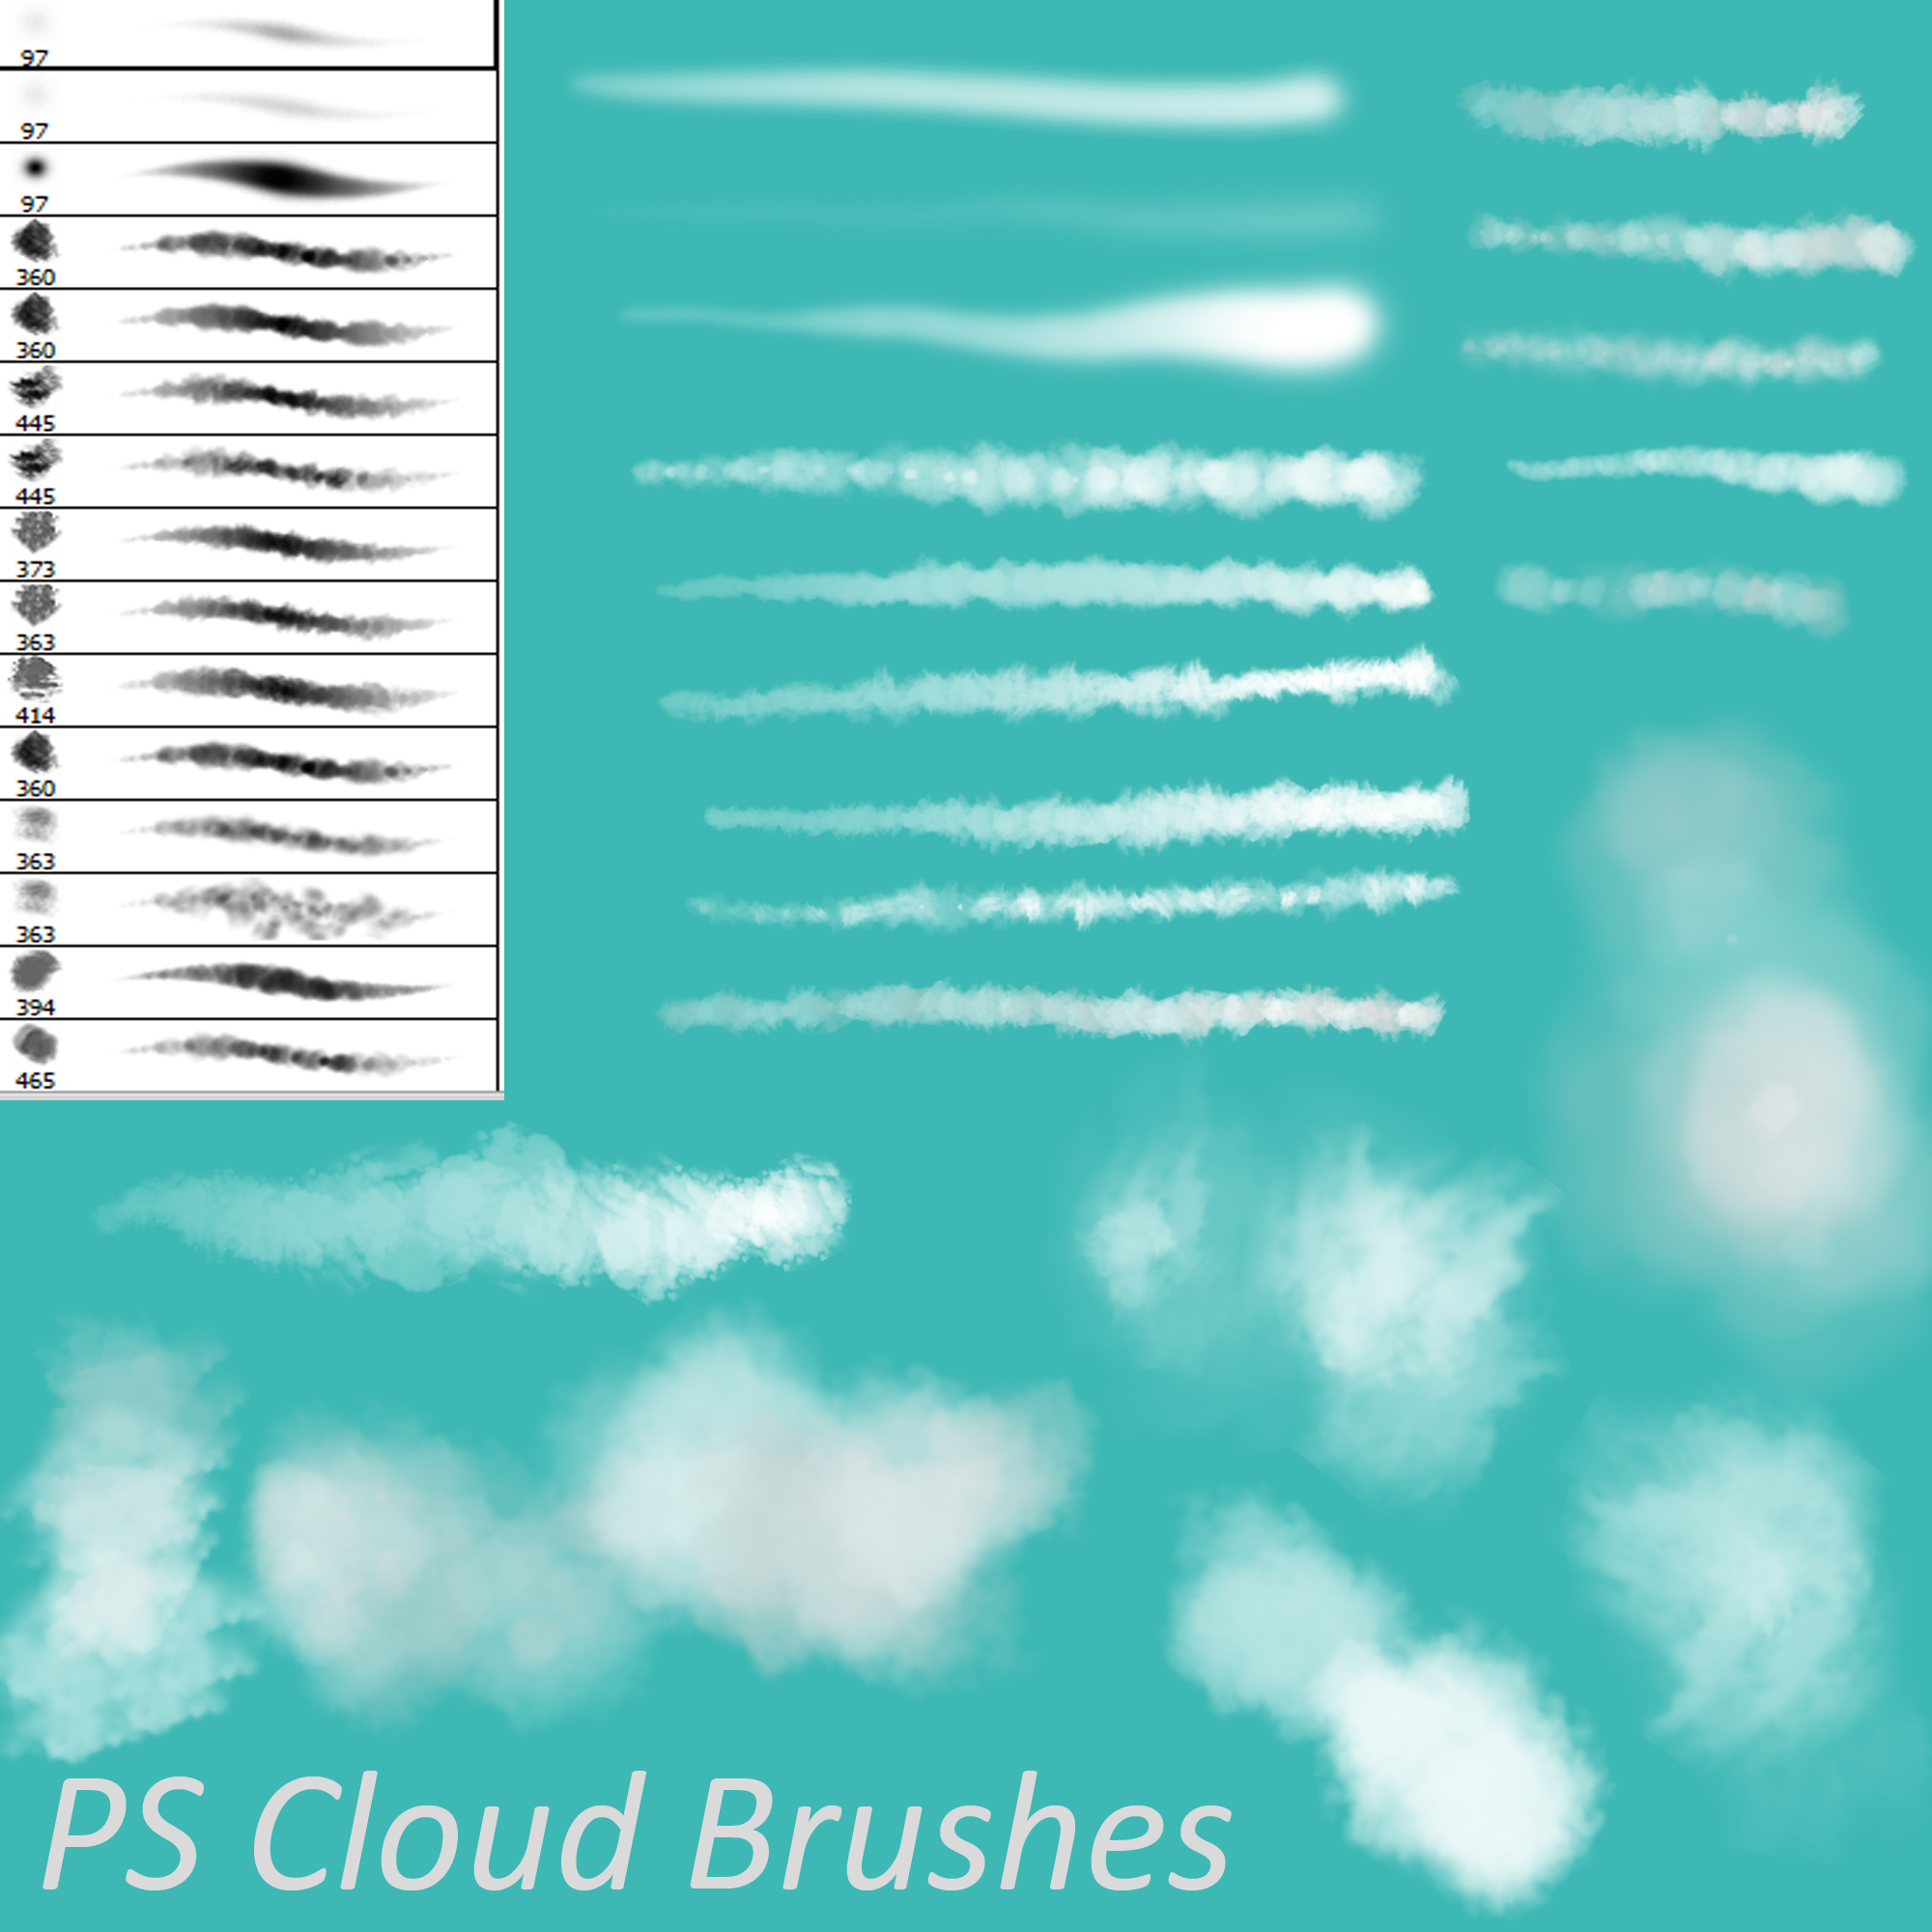 PS Cloud Brushes by Dark Zeblock on DeviantArt